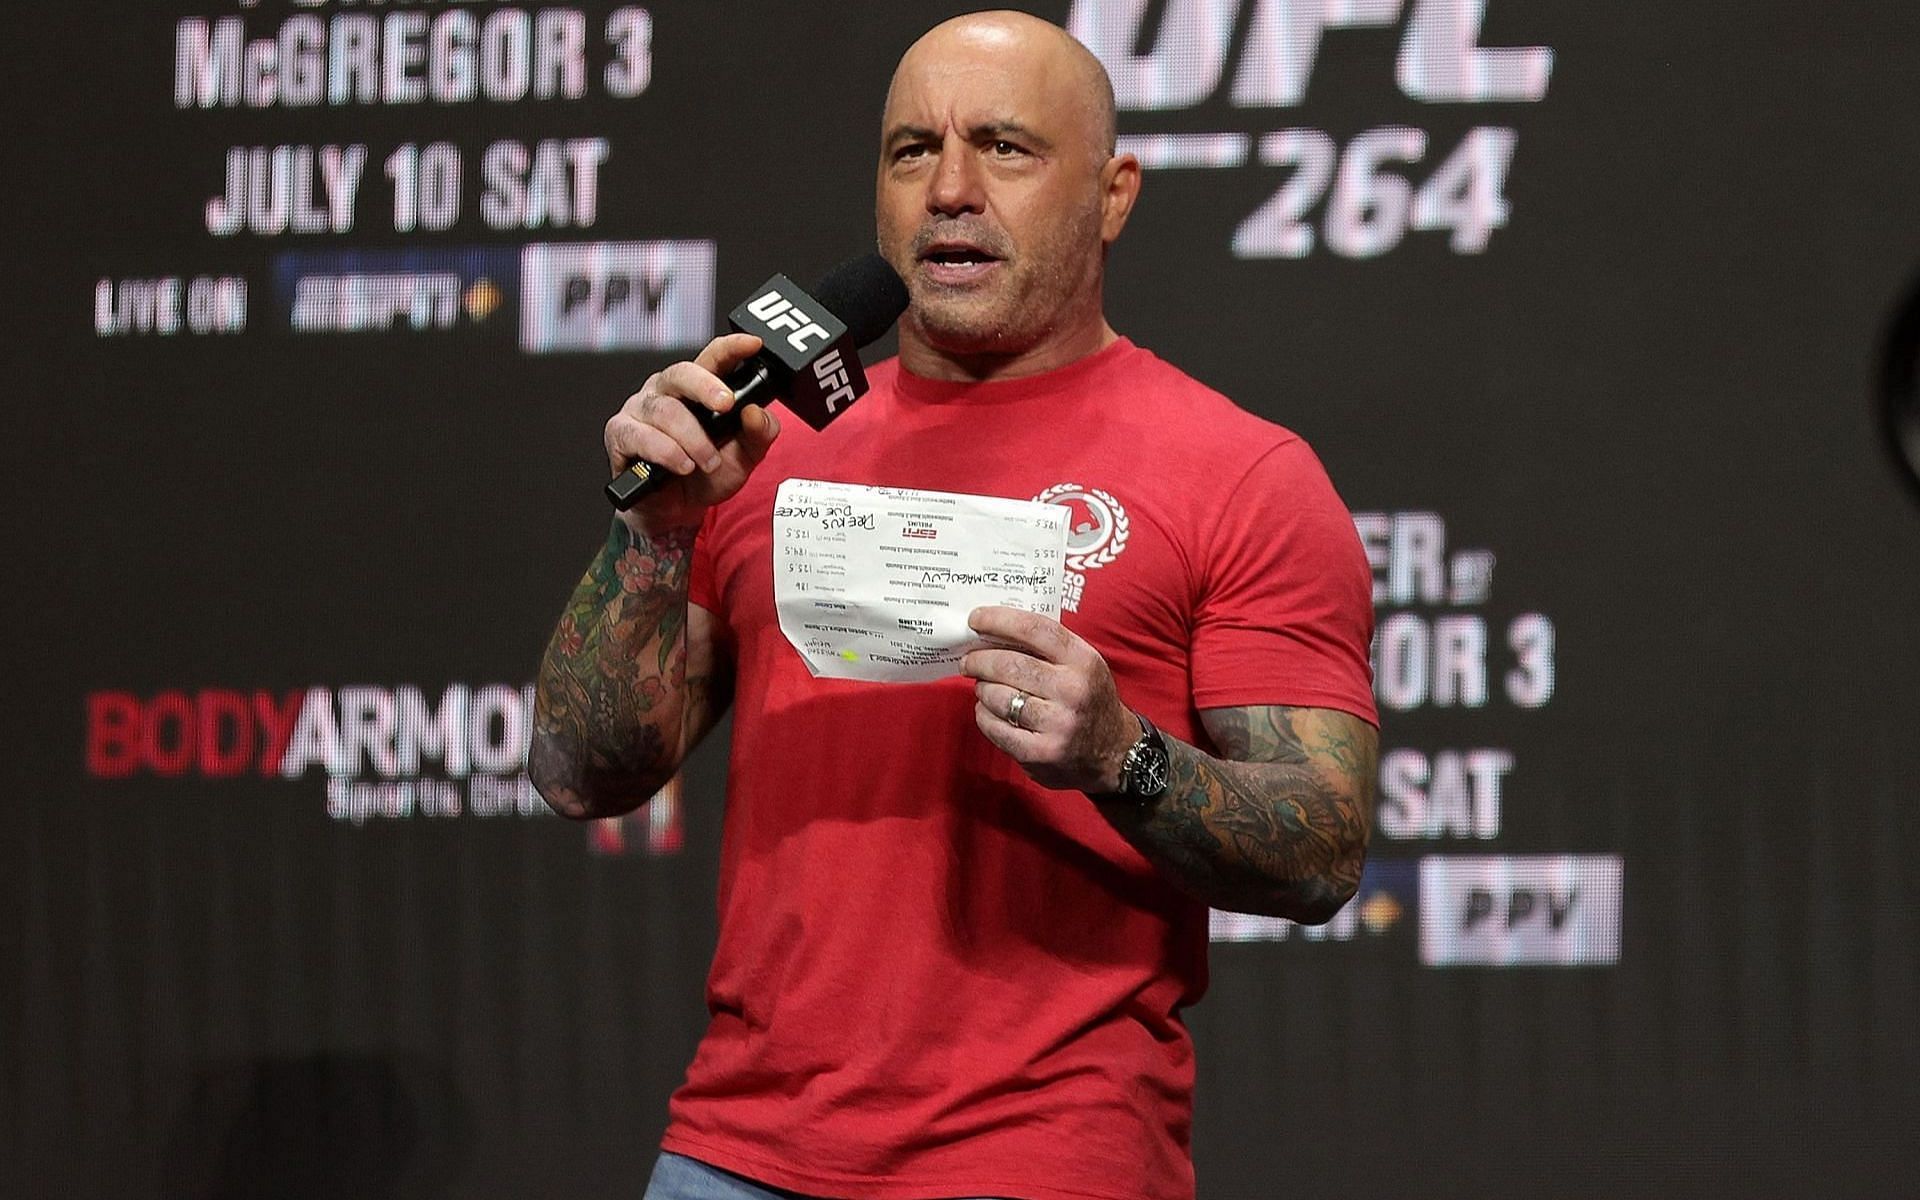 Joe Rogan at UFC 264 weigh-ins in Las Vegas